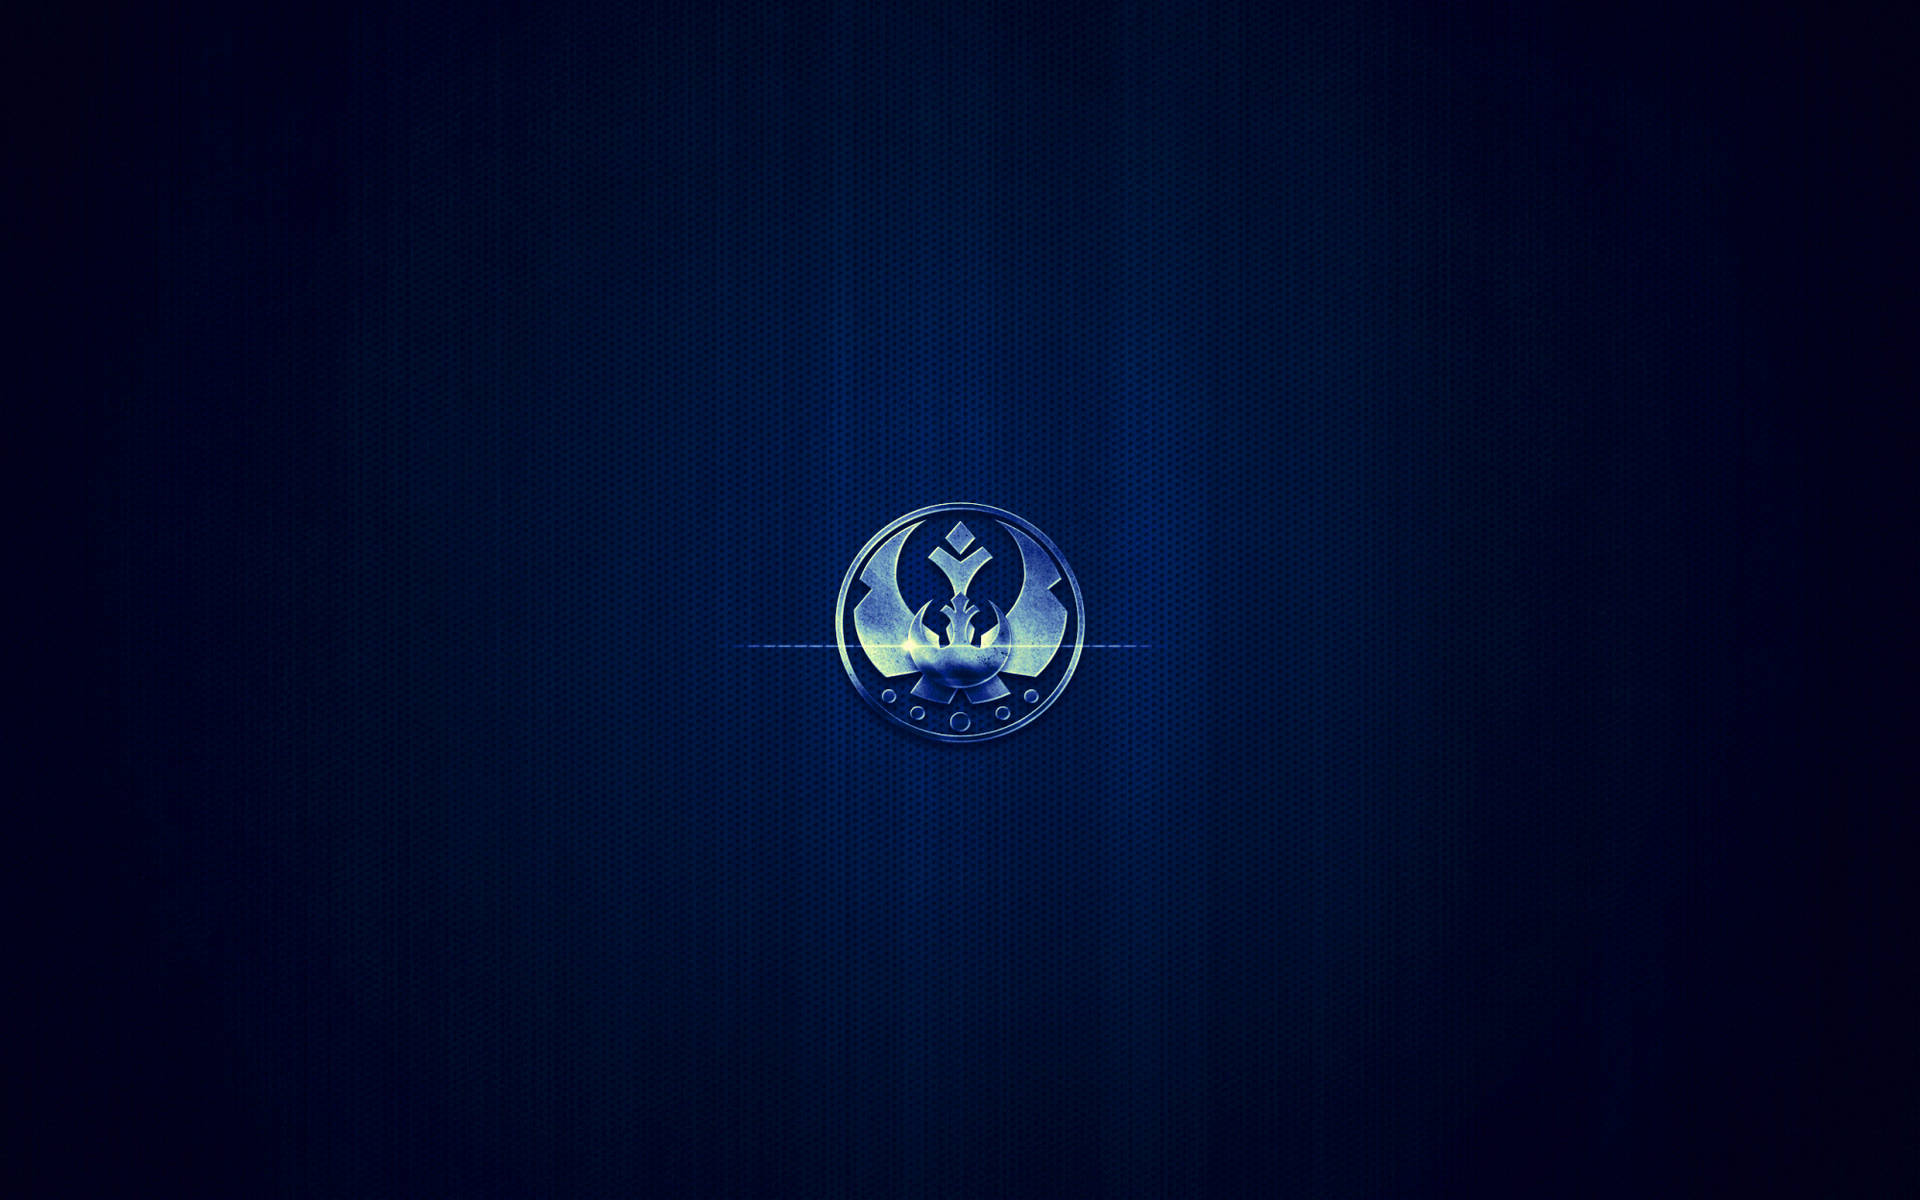 Cool Star Wars Blue Symbol Background